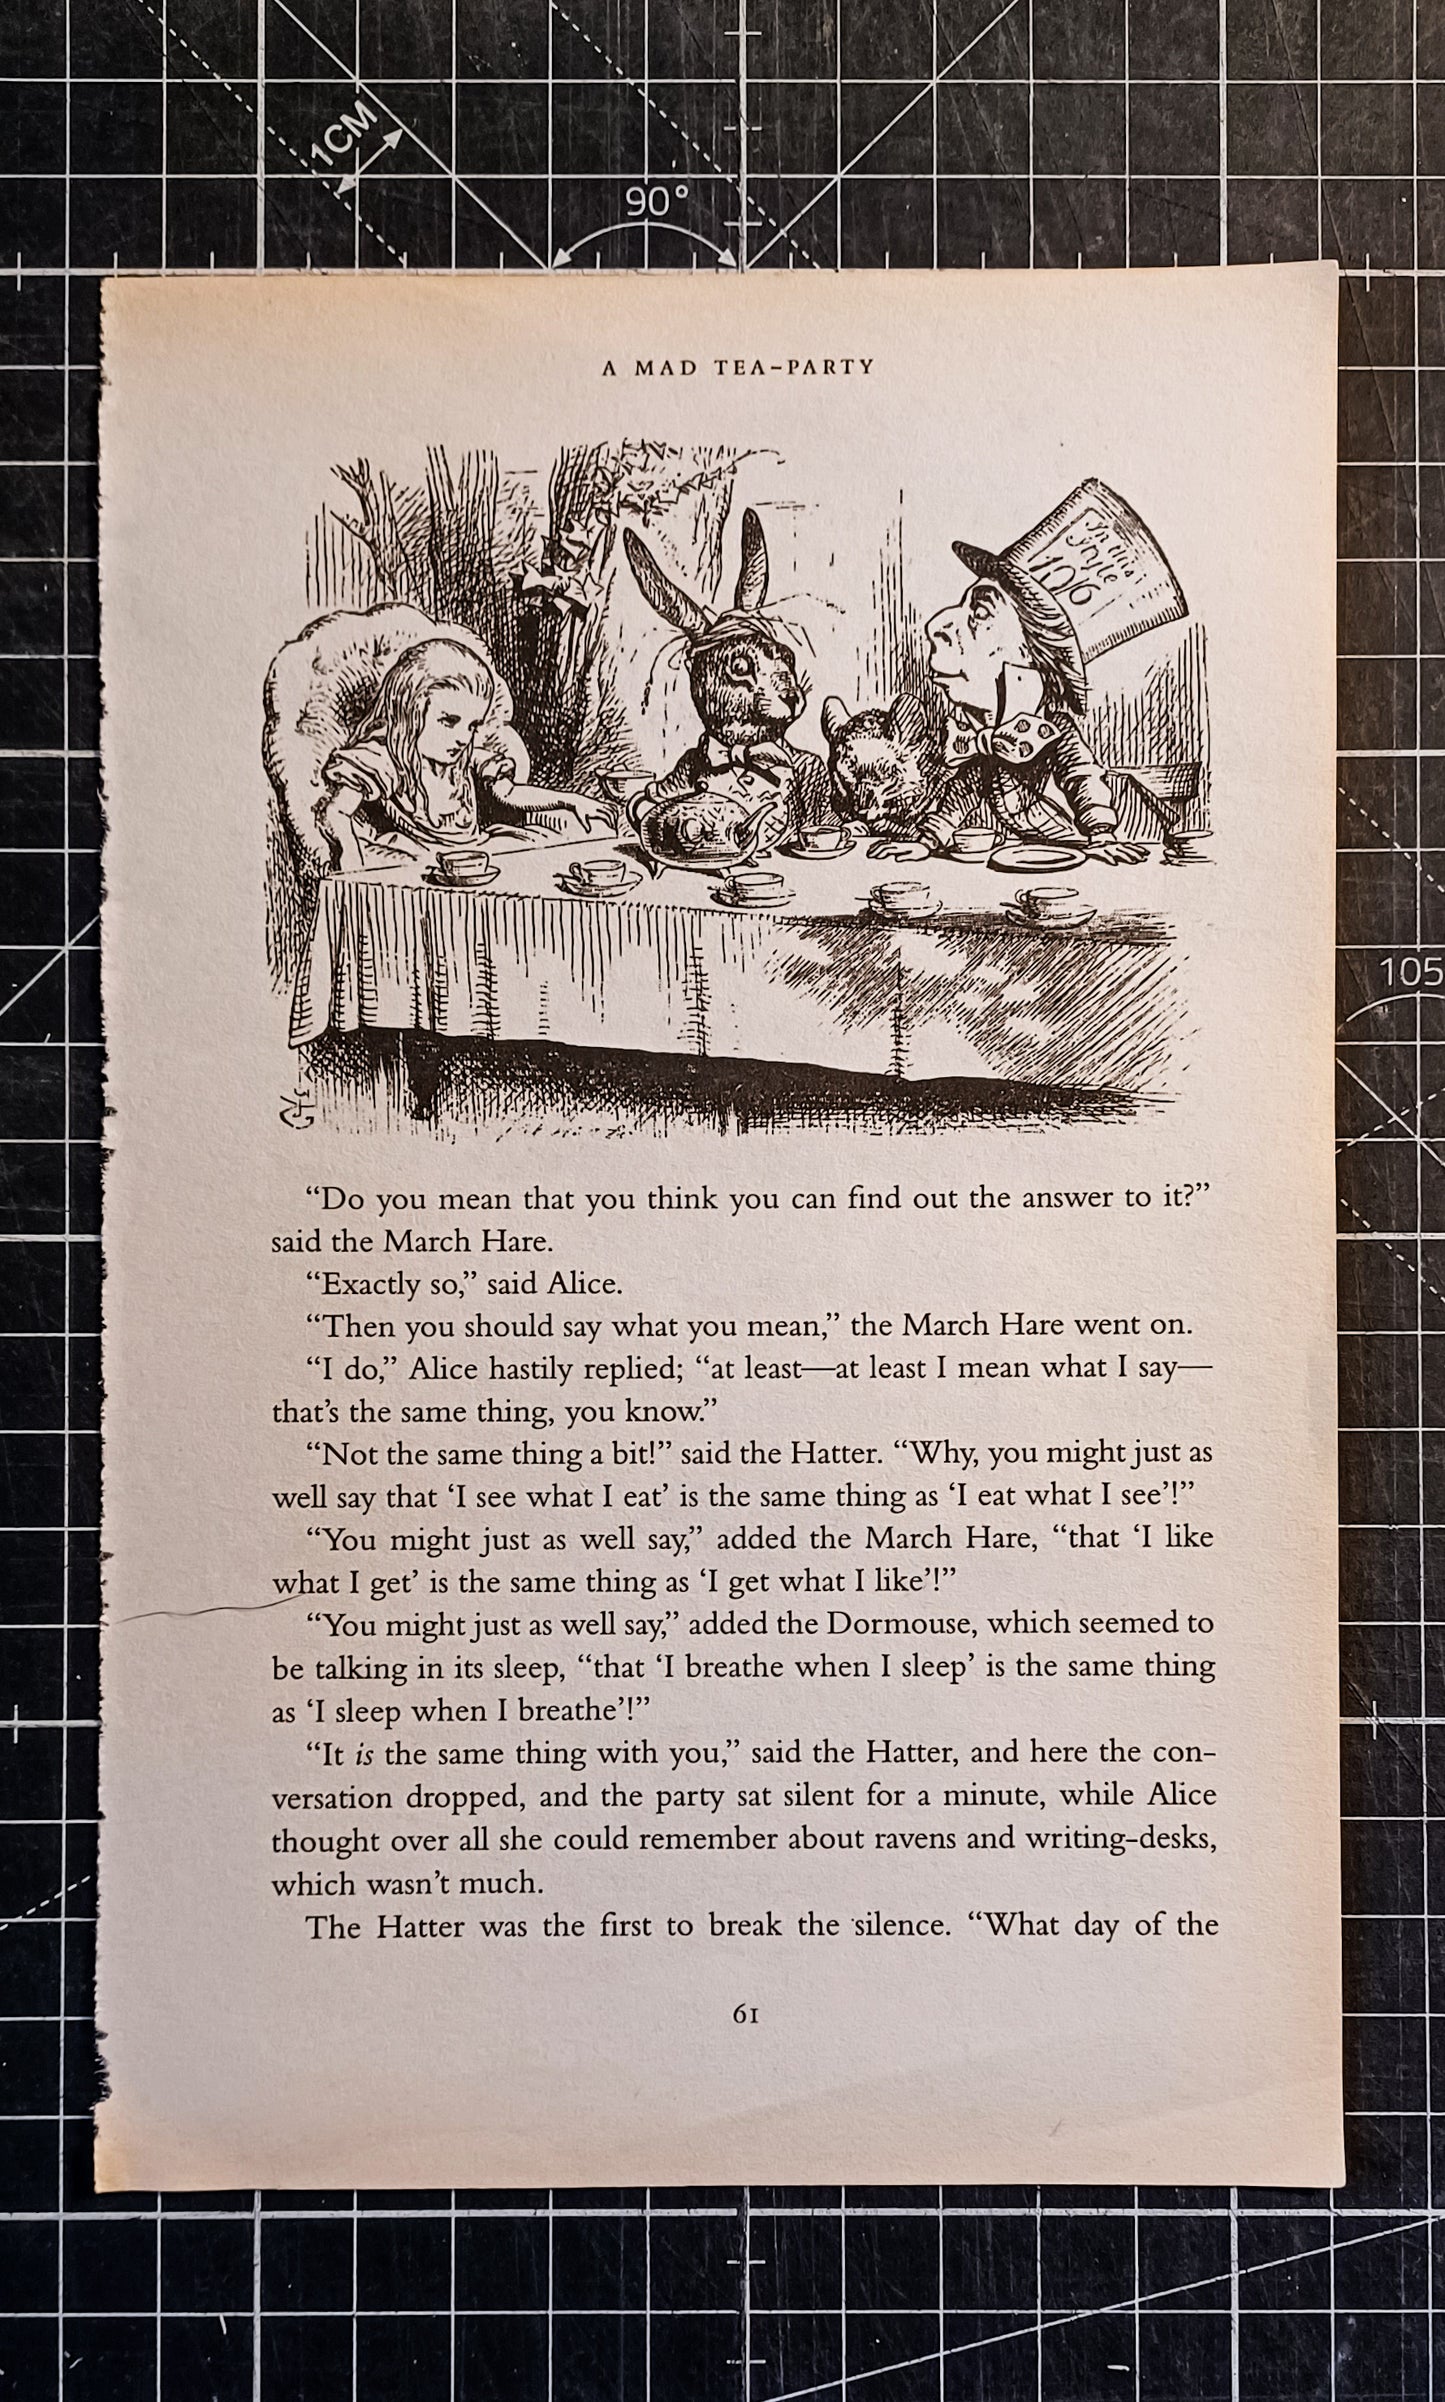 Alice in Wonderland "A Mad Tea-Party" Original Double Papercut